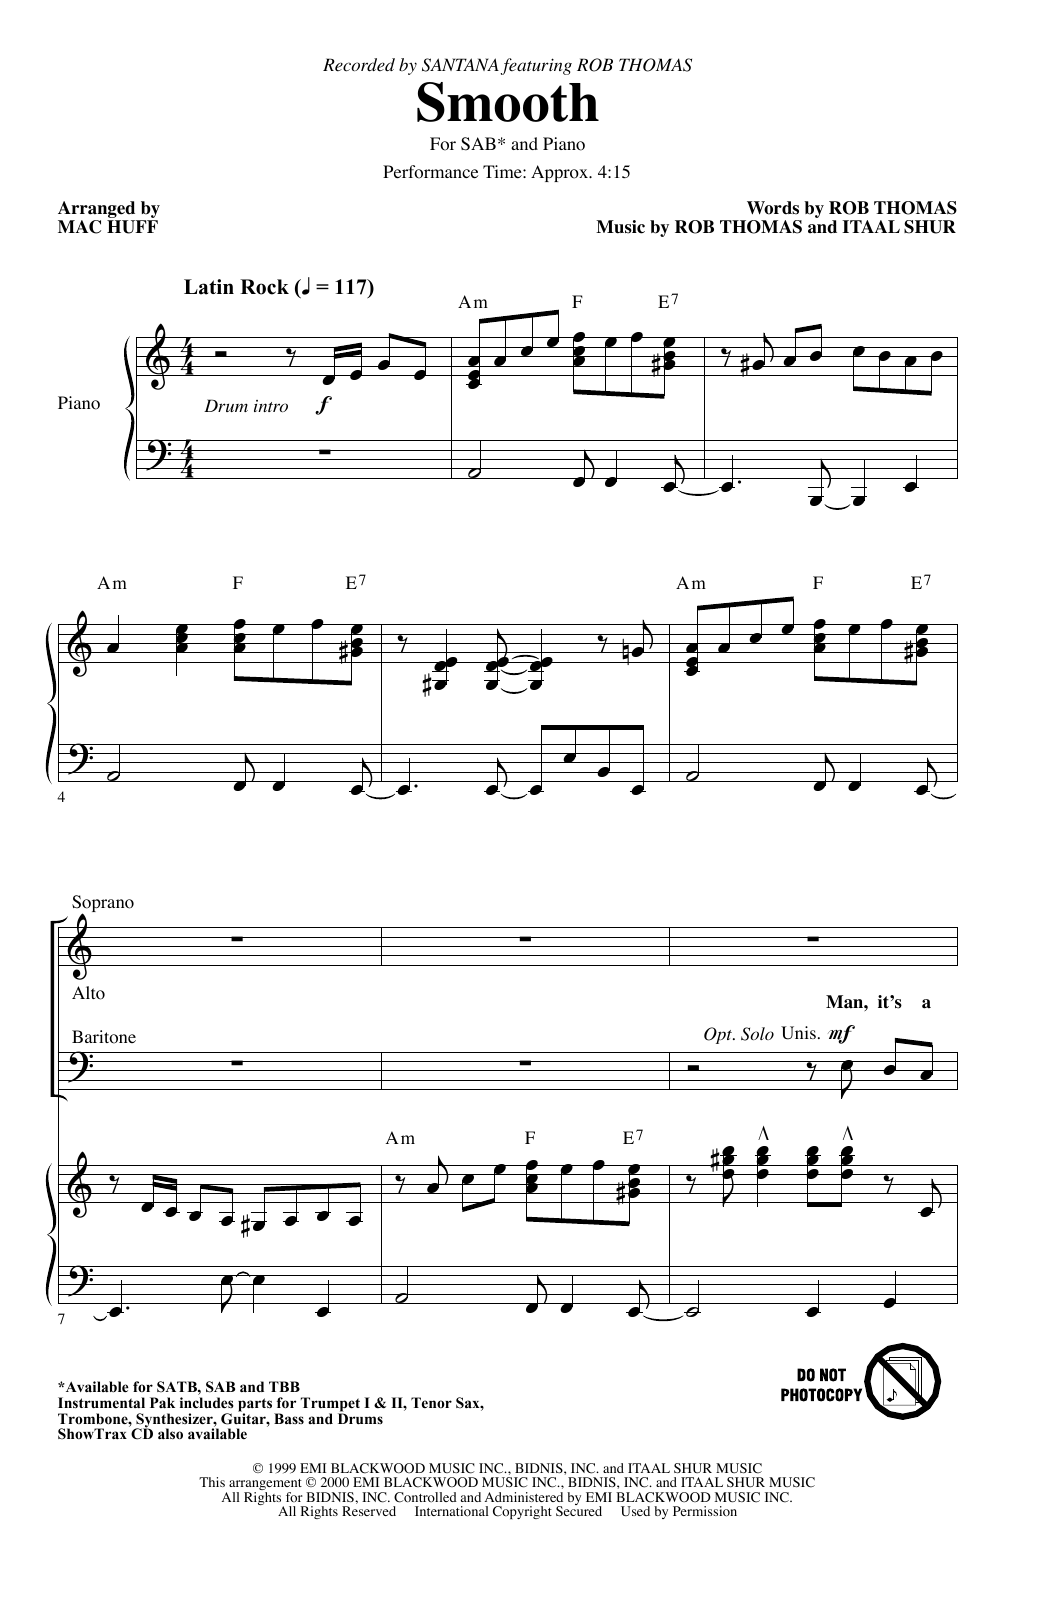 Santana Smooth (arr. Mac Huff) Sheet Music Notes & Chords for SATB Choir - Download or Print PDF